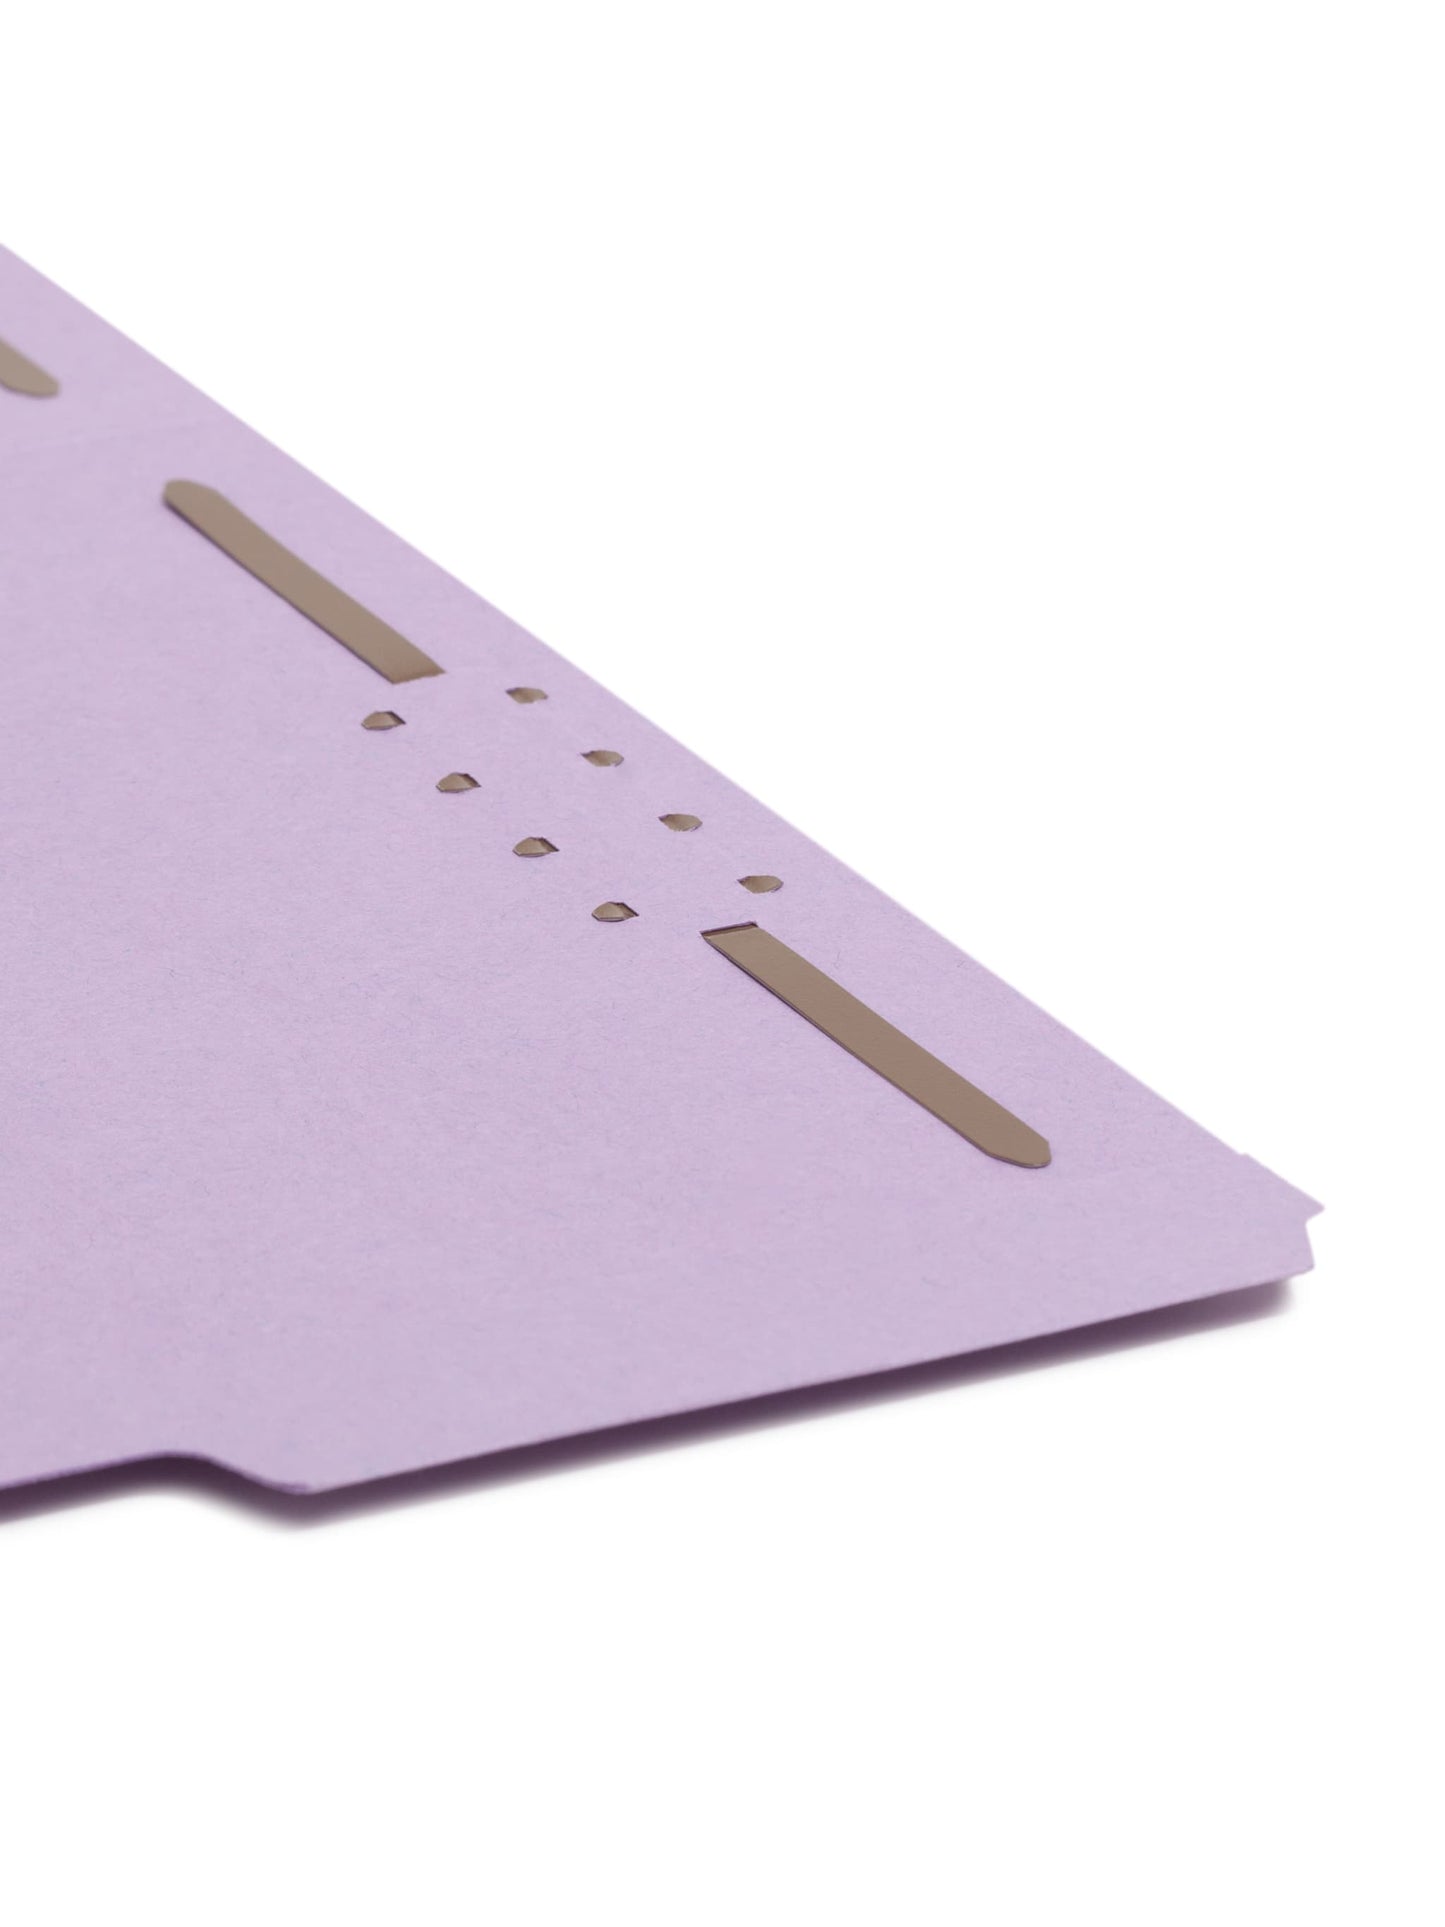 Reinforced Tab Fastener File Folders, 1/3-Cut Tab, 2 Fasteners, Lavender Color, Letter Size, Set of 50, 086486124409